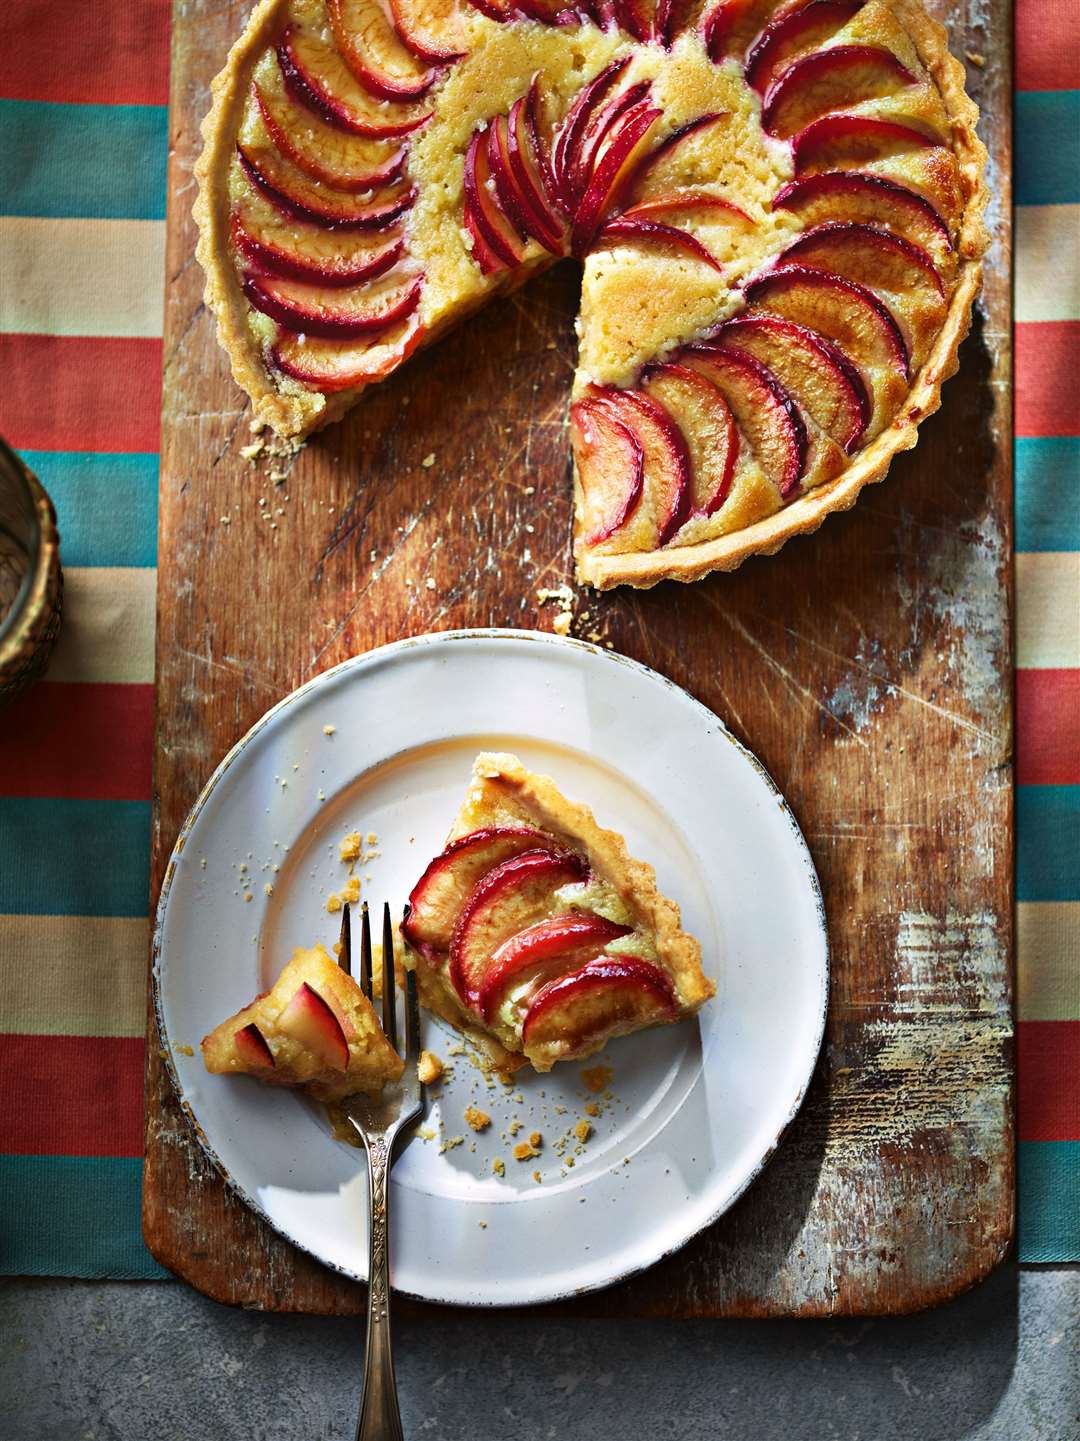 Ainsley Harriott's plum frangipane tart from Ainsley's Mediterranean Cookbook. Picture: Dan Jones/PA